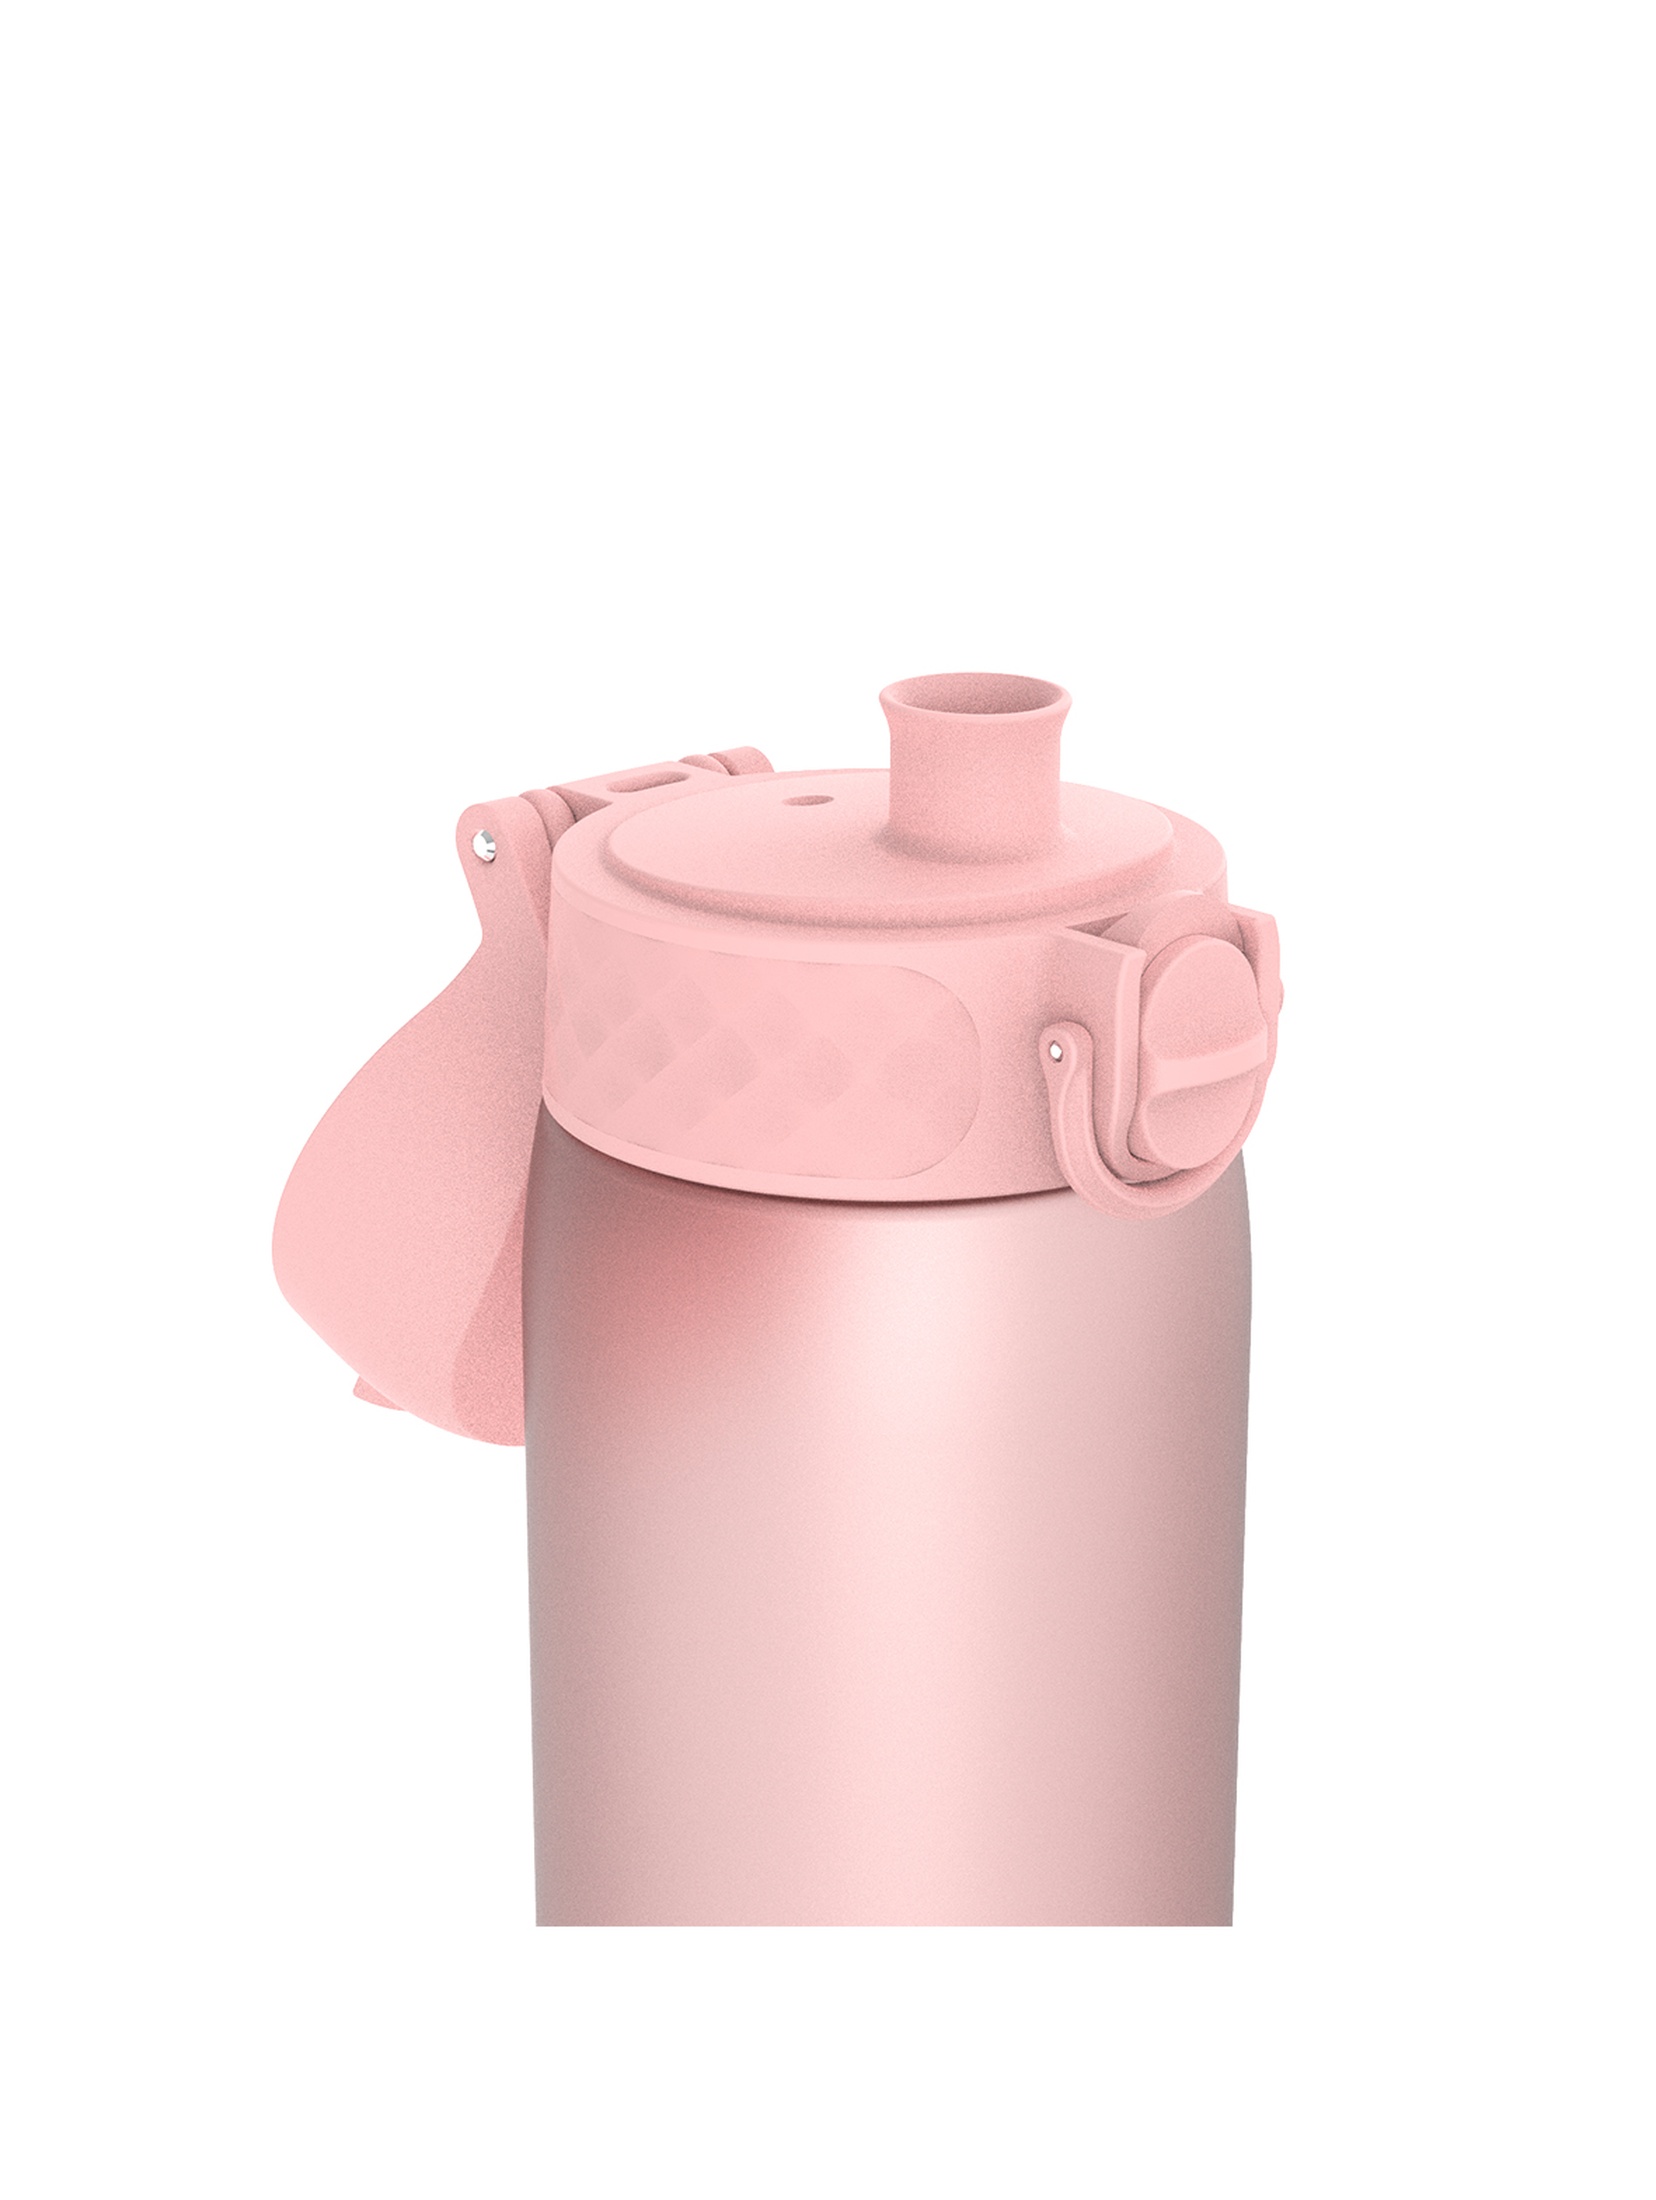 Butelka na wodę ION8 BPA Free Rose Quartz 500ml - różowa